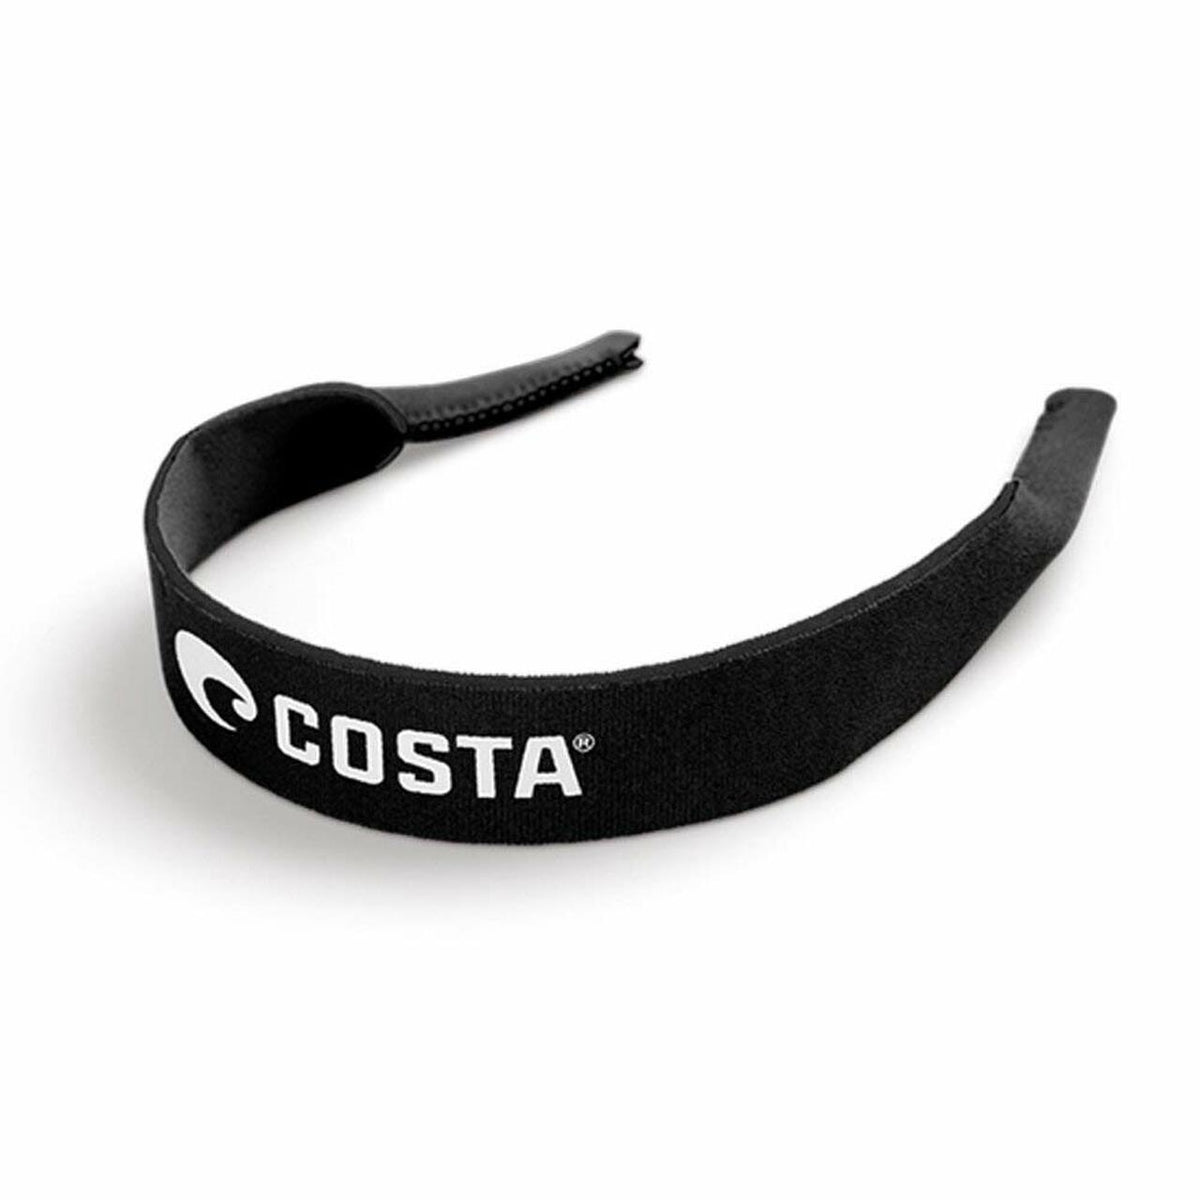 Costa Megaprene Black